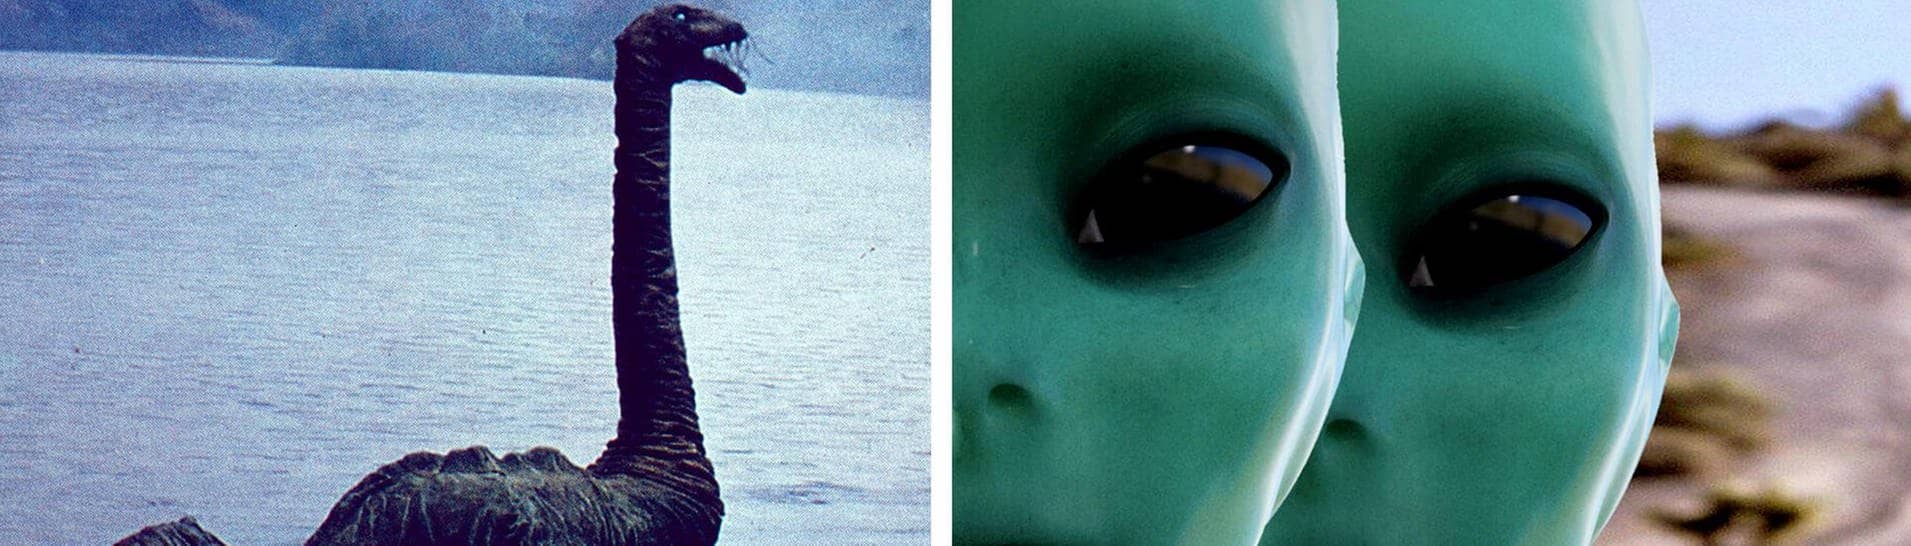 Nessi - das Monster von Loch Ness und die Aliens in Area 51 (Foto: Fotolia/crimson, imago images / ZUMA Press, picture alliance/United Archives)